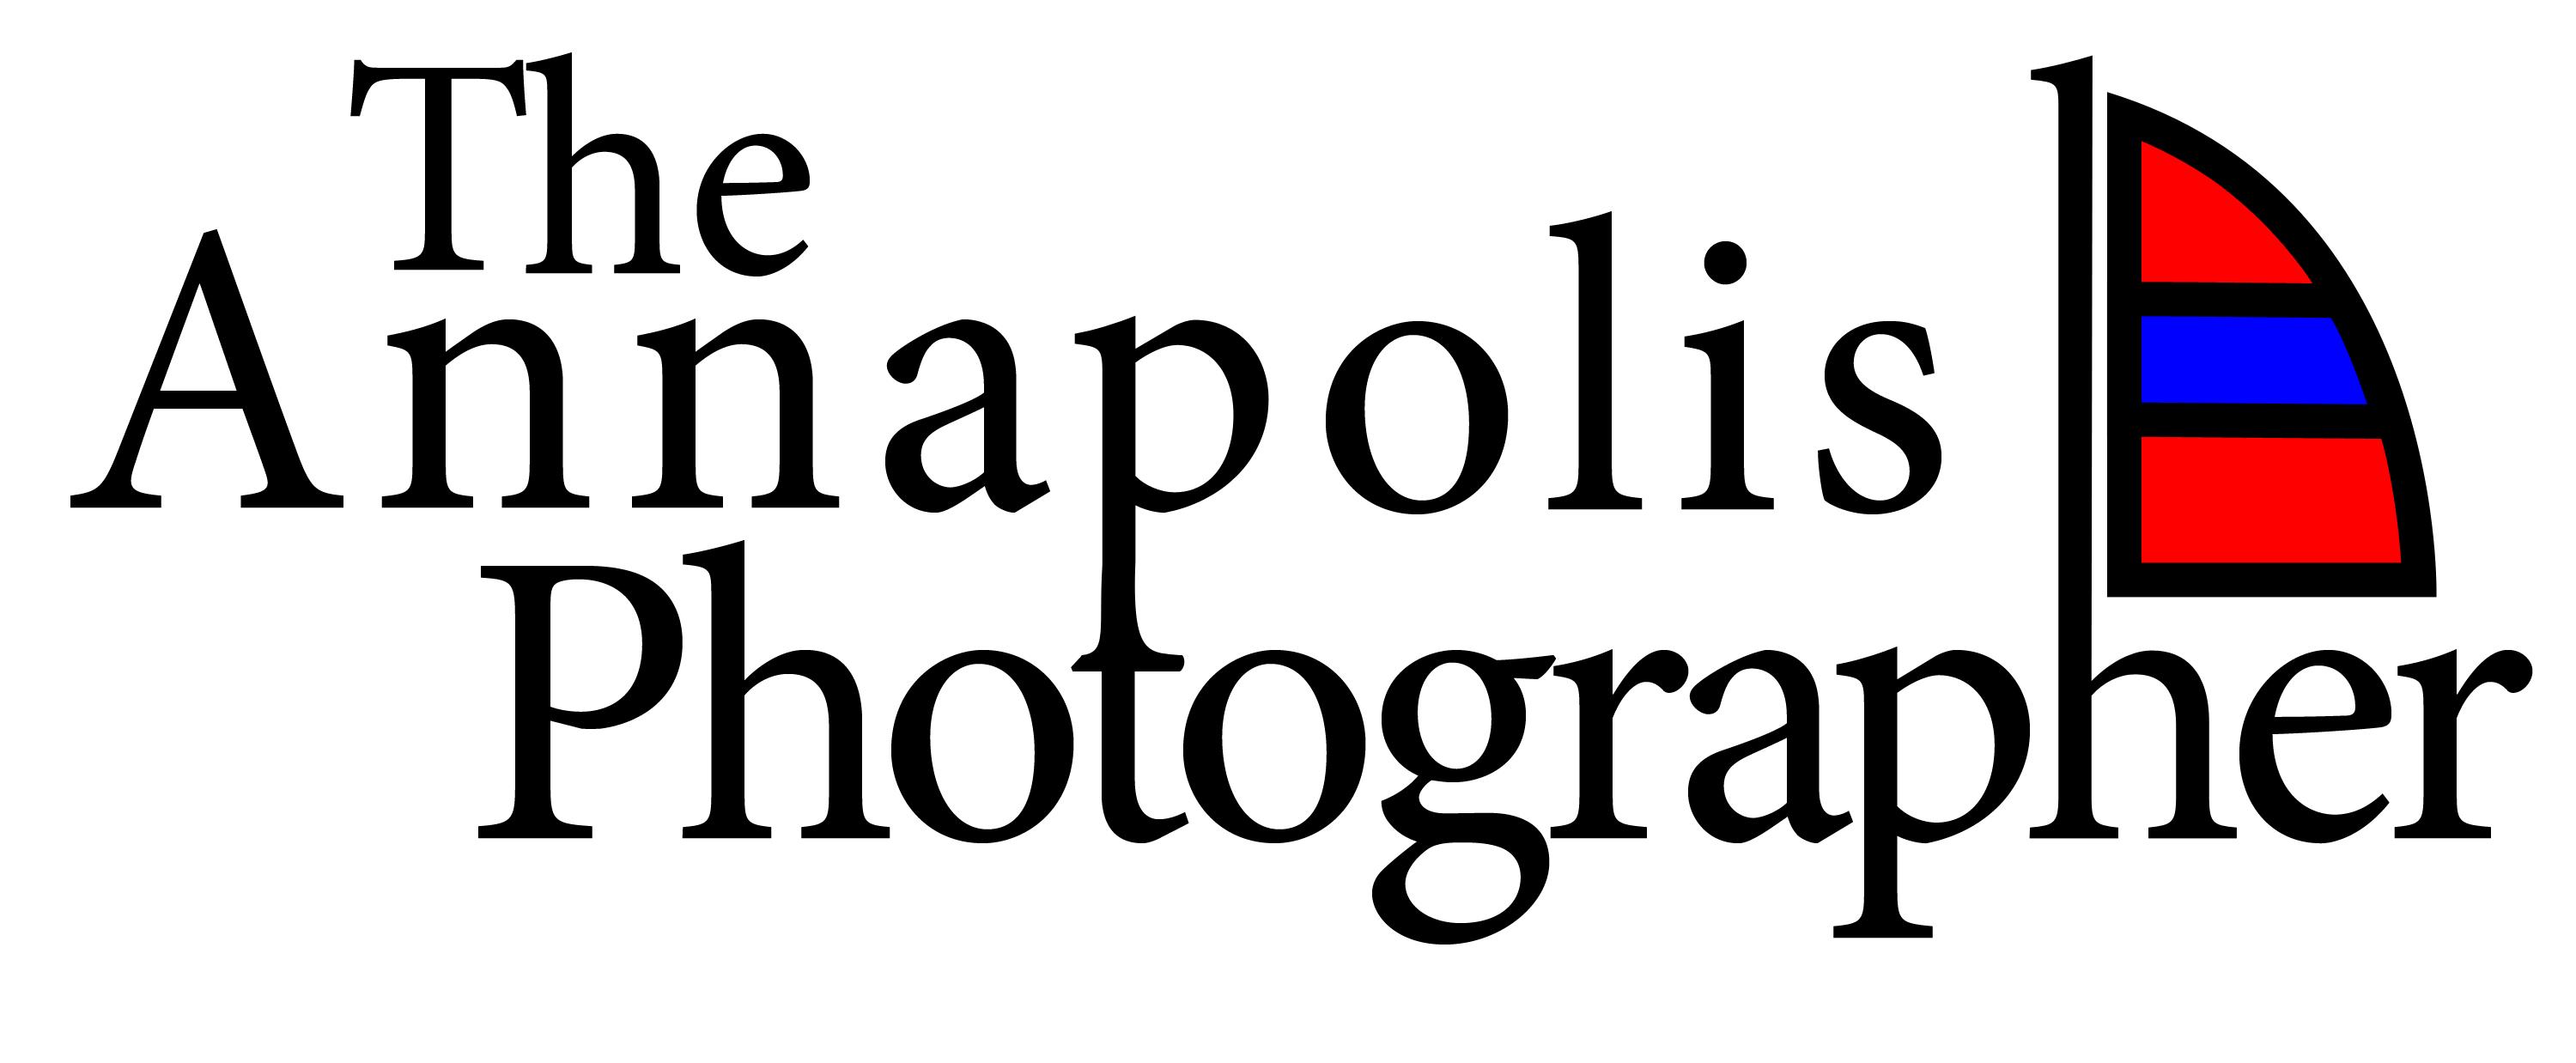 The Annapolis Photographer